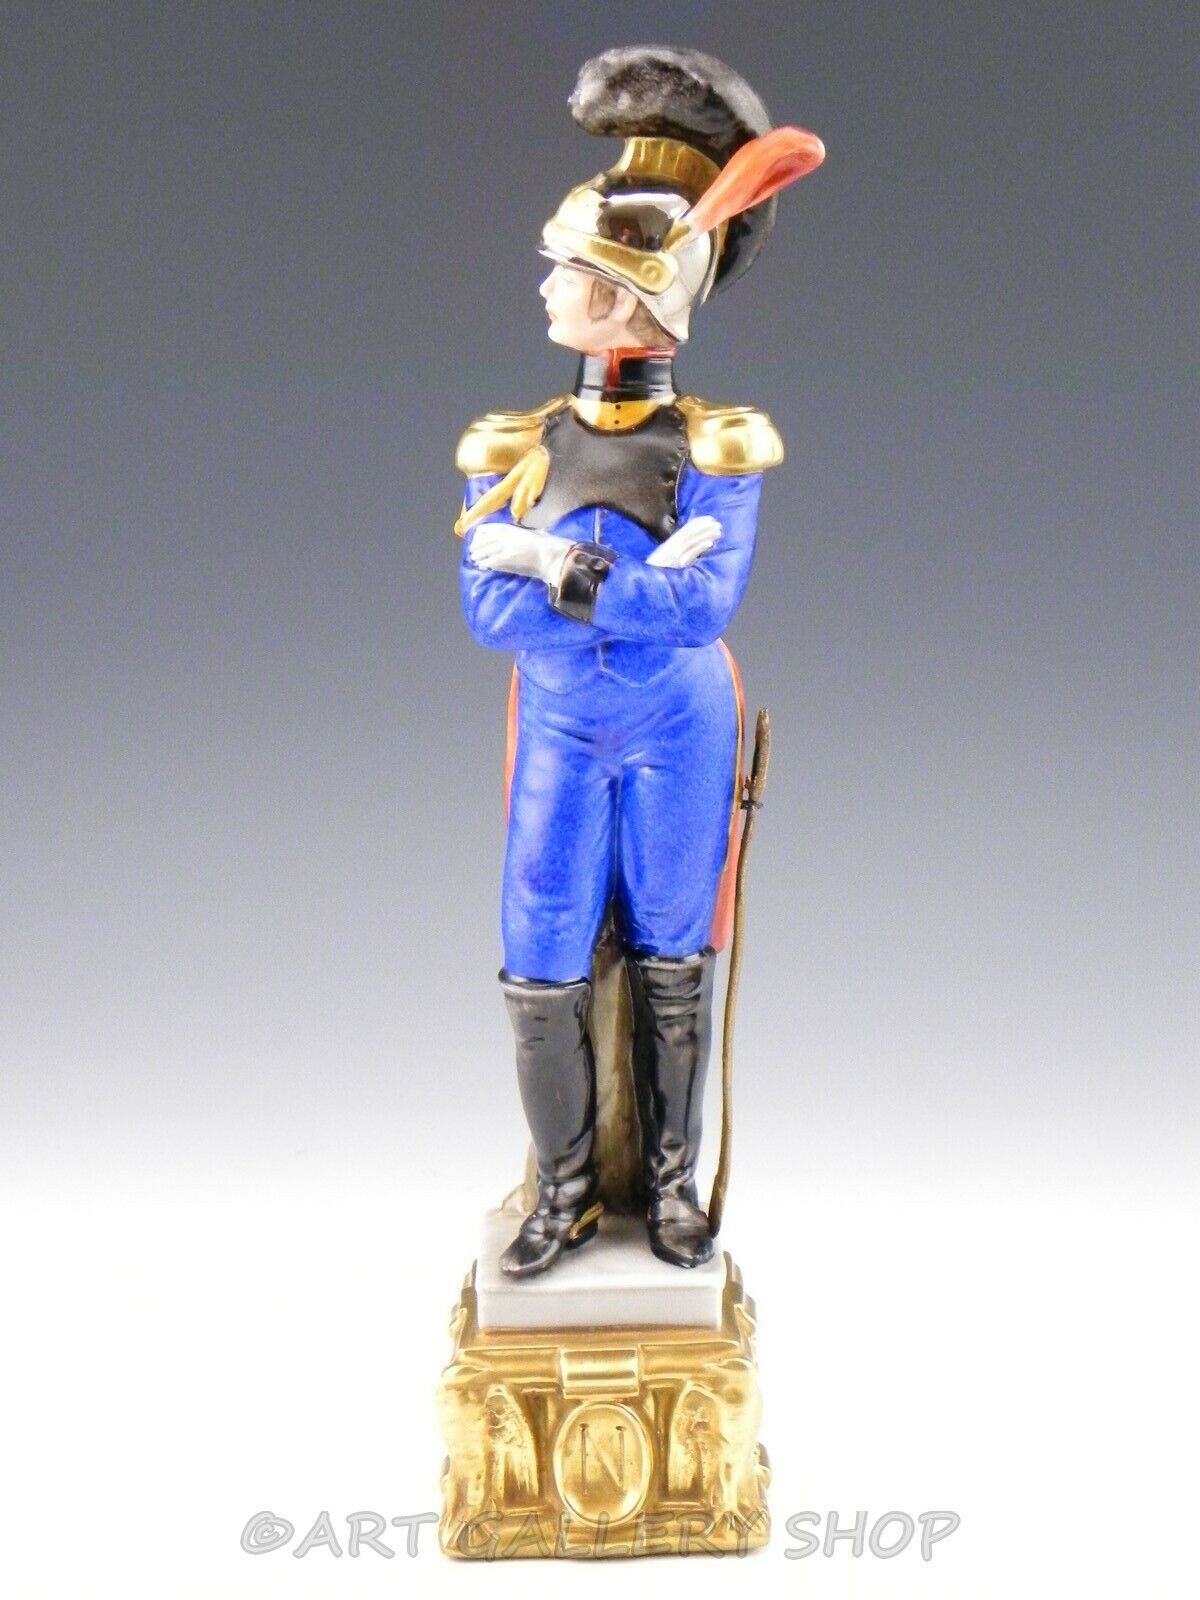 Capodimonte Italy B. Merli Porcelain Figure 11.5" Napoleonic War Soldier & Sword